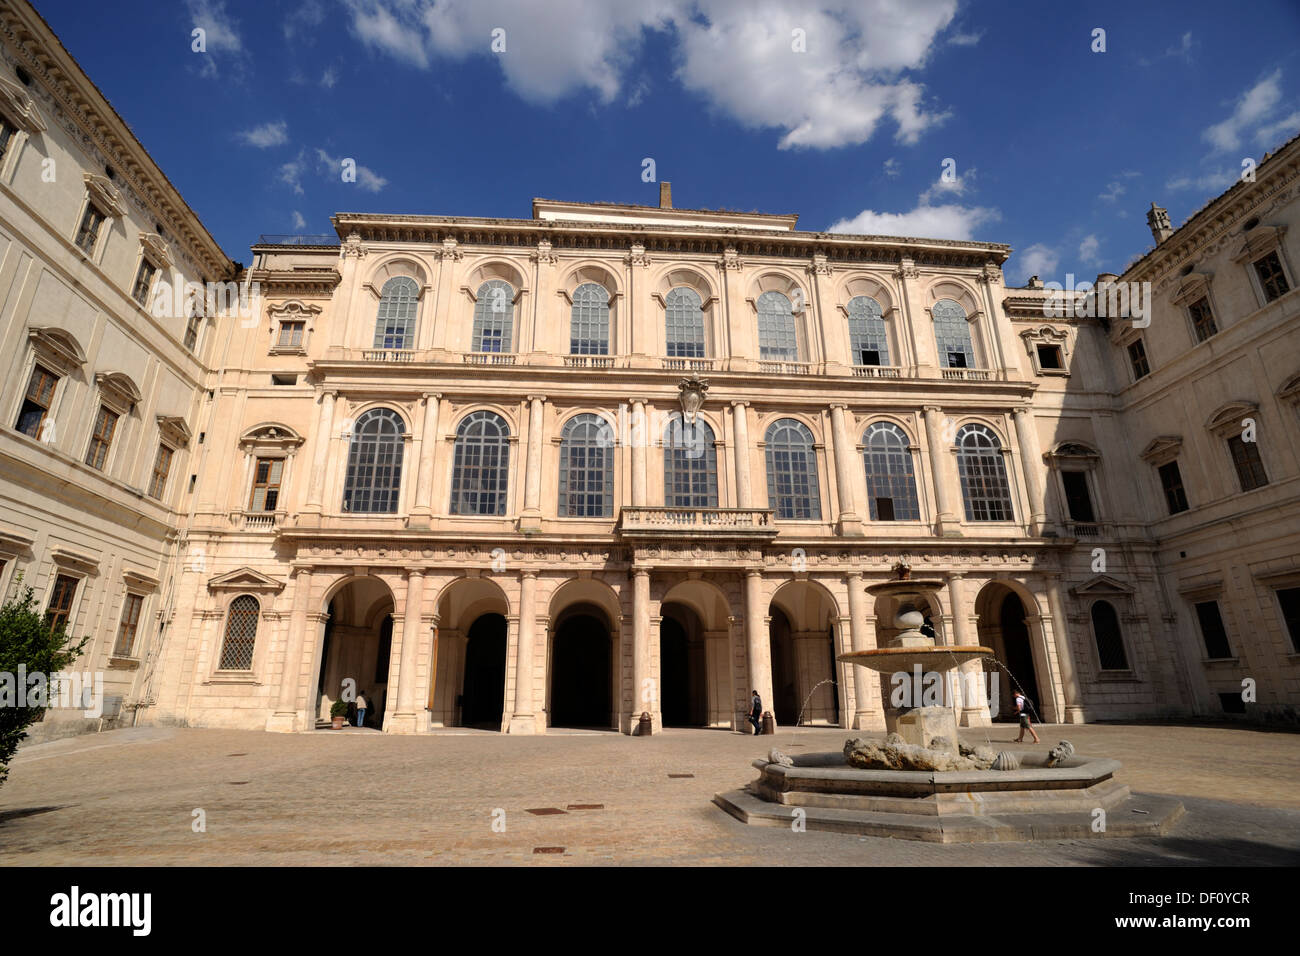 L'Italie, Rome, Palazzo Barberini, Galleria nazionale d'arte antica, galerie nationale d'art ancien Banque D'Images